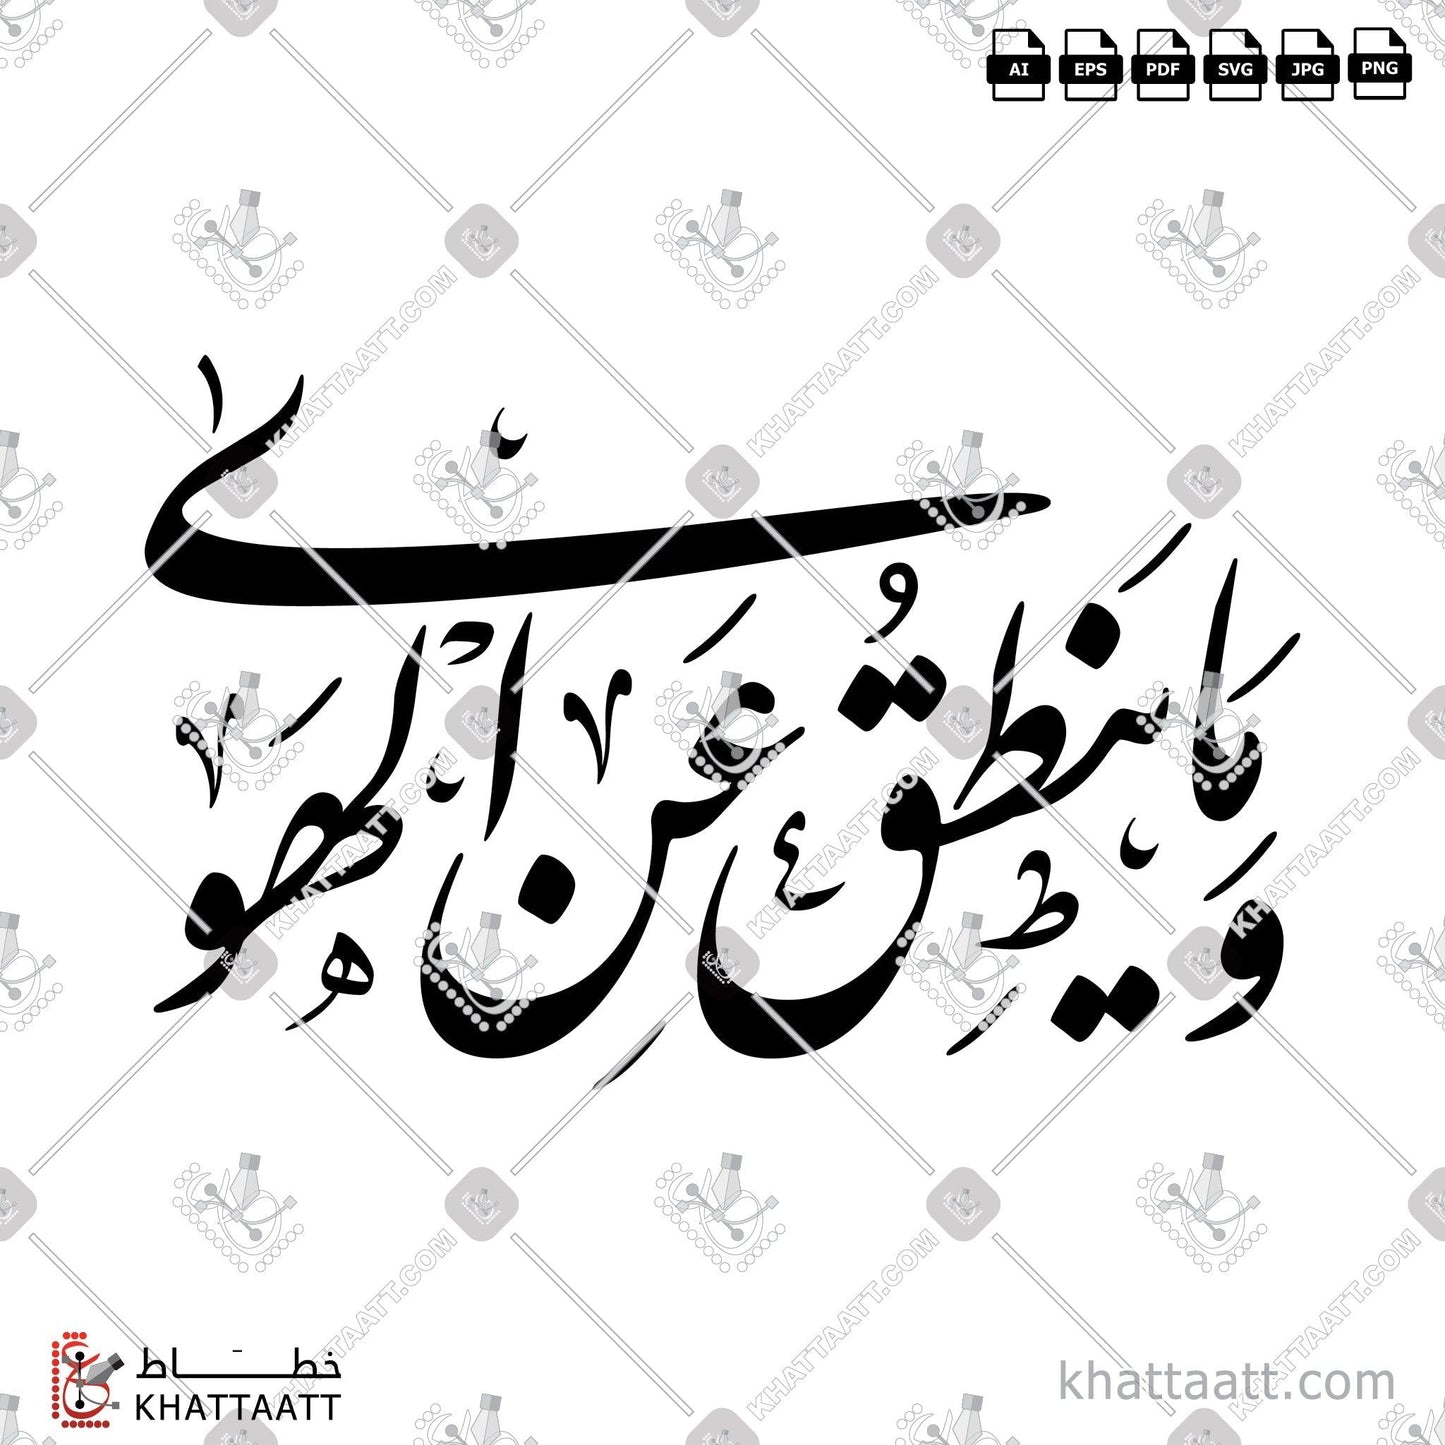 Download Arabic Calligraphy of وما ينطق عن الهوى in Farsi - الخط الفارسي in vector and .png